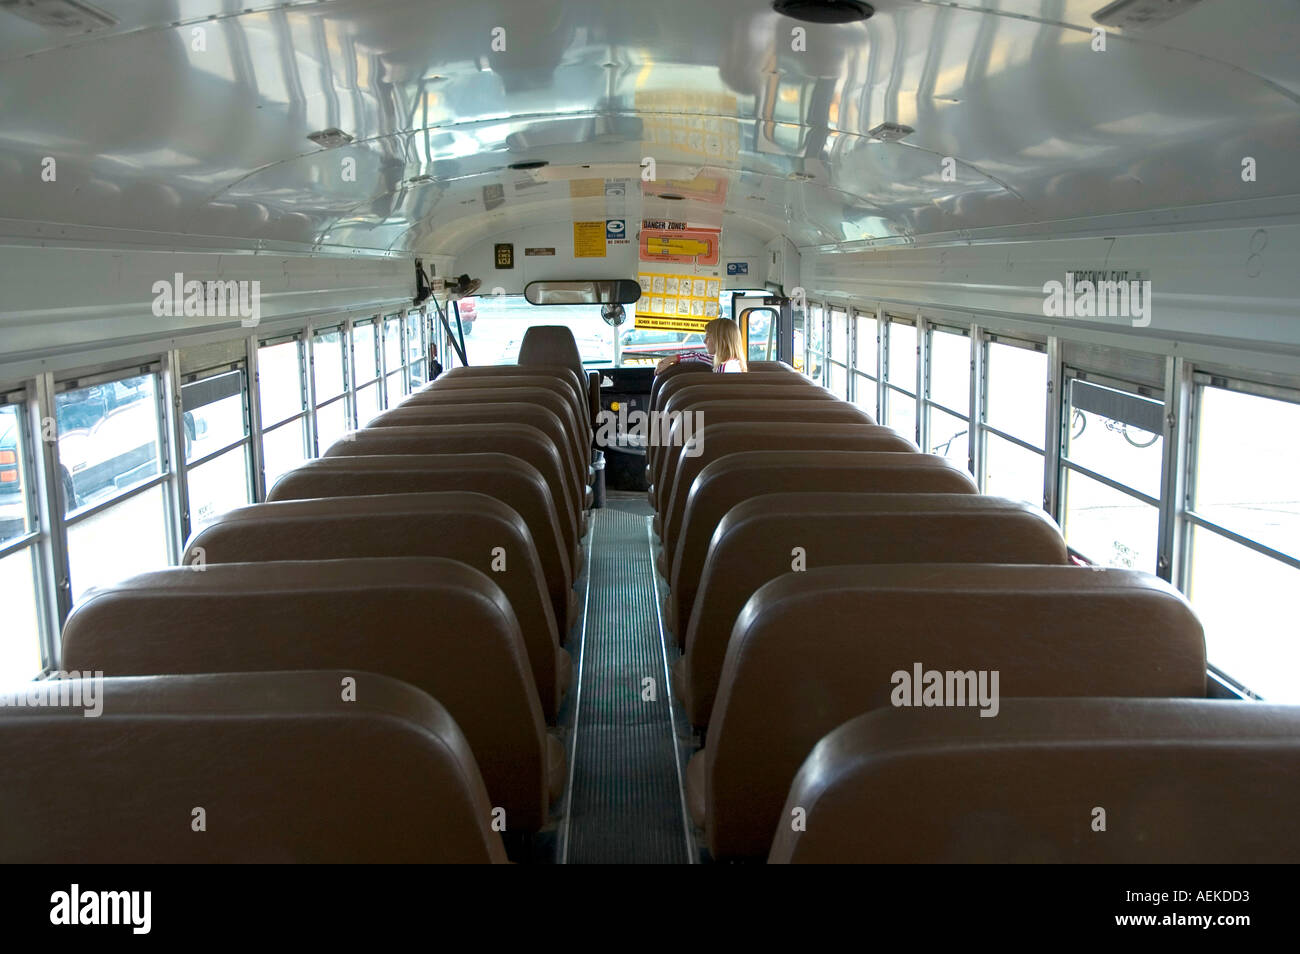 Interior Of A School Bus Stock Photo 2538962 Alamy